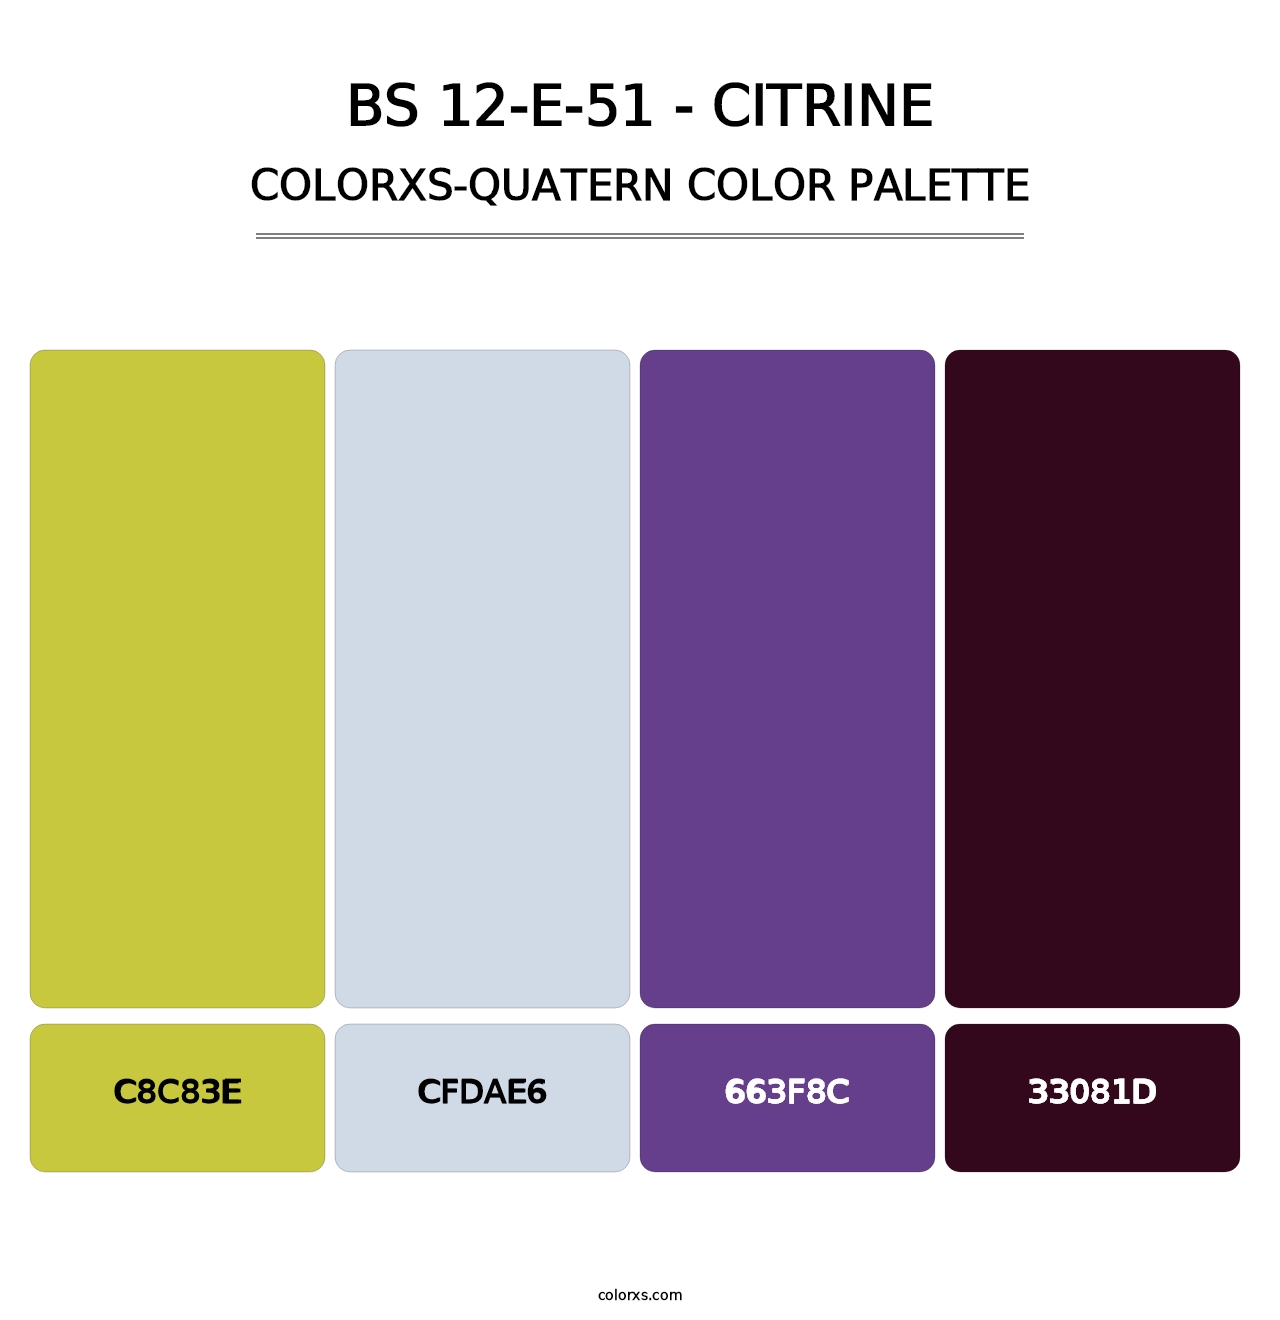 BS 12-E-51 - Citrine - Colorxs Quatern Palette